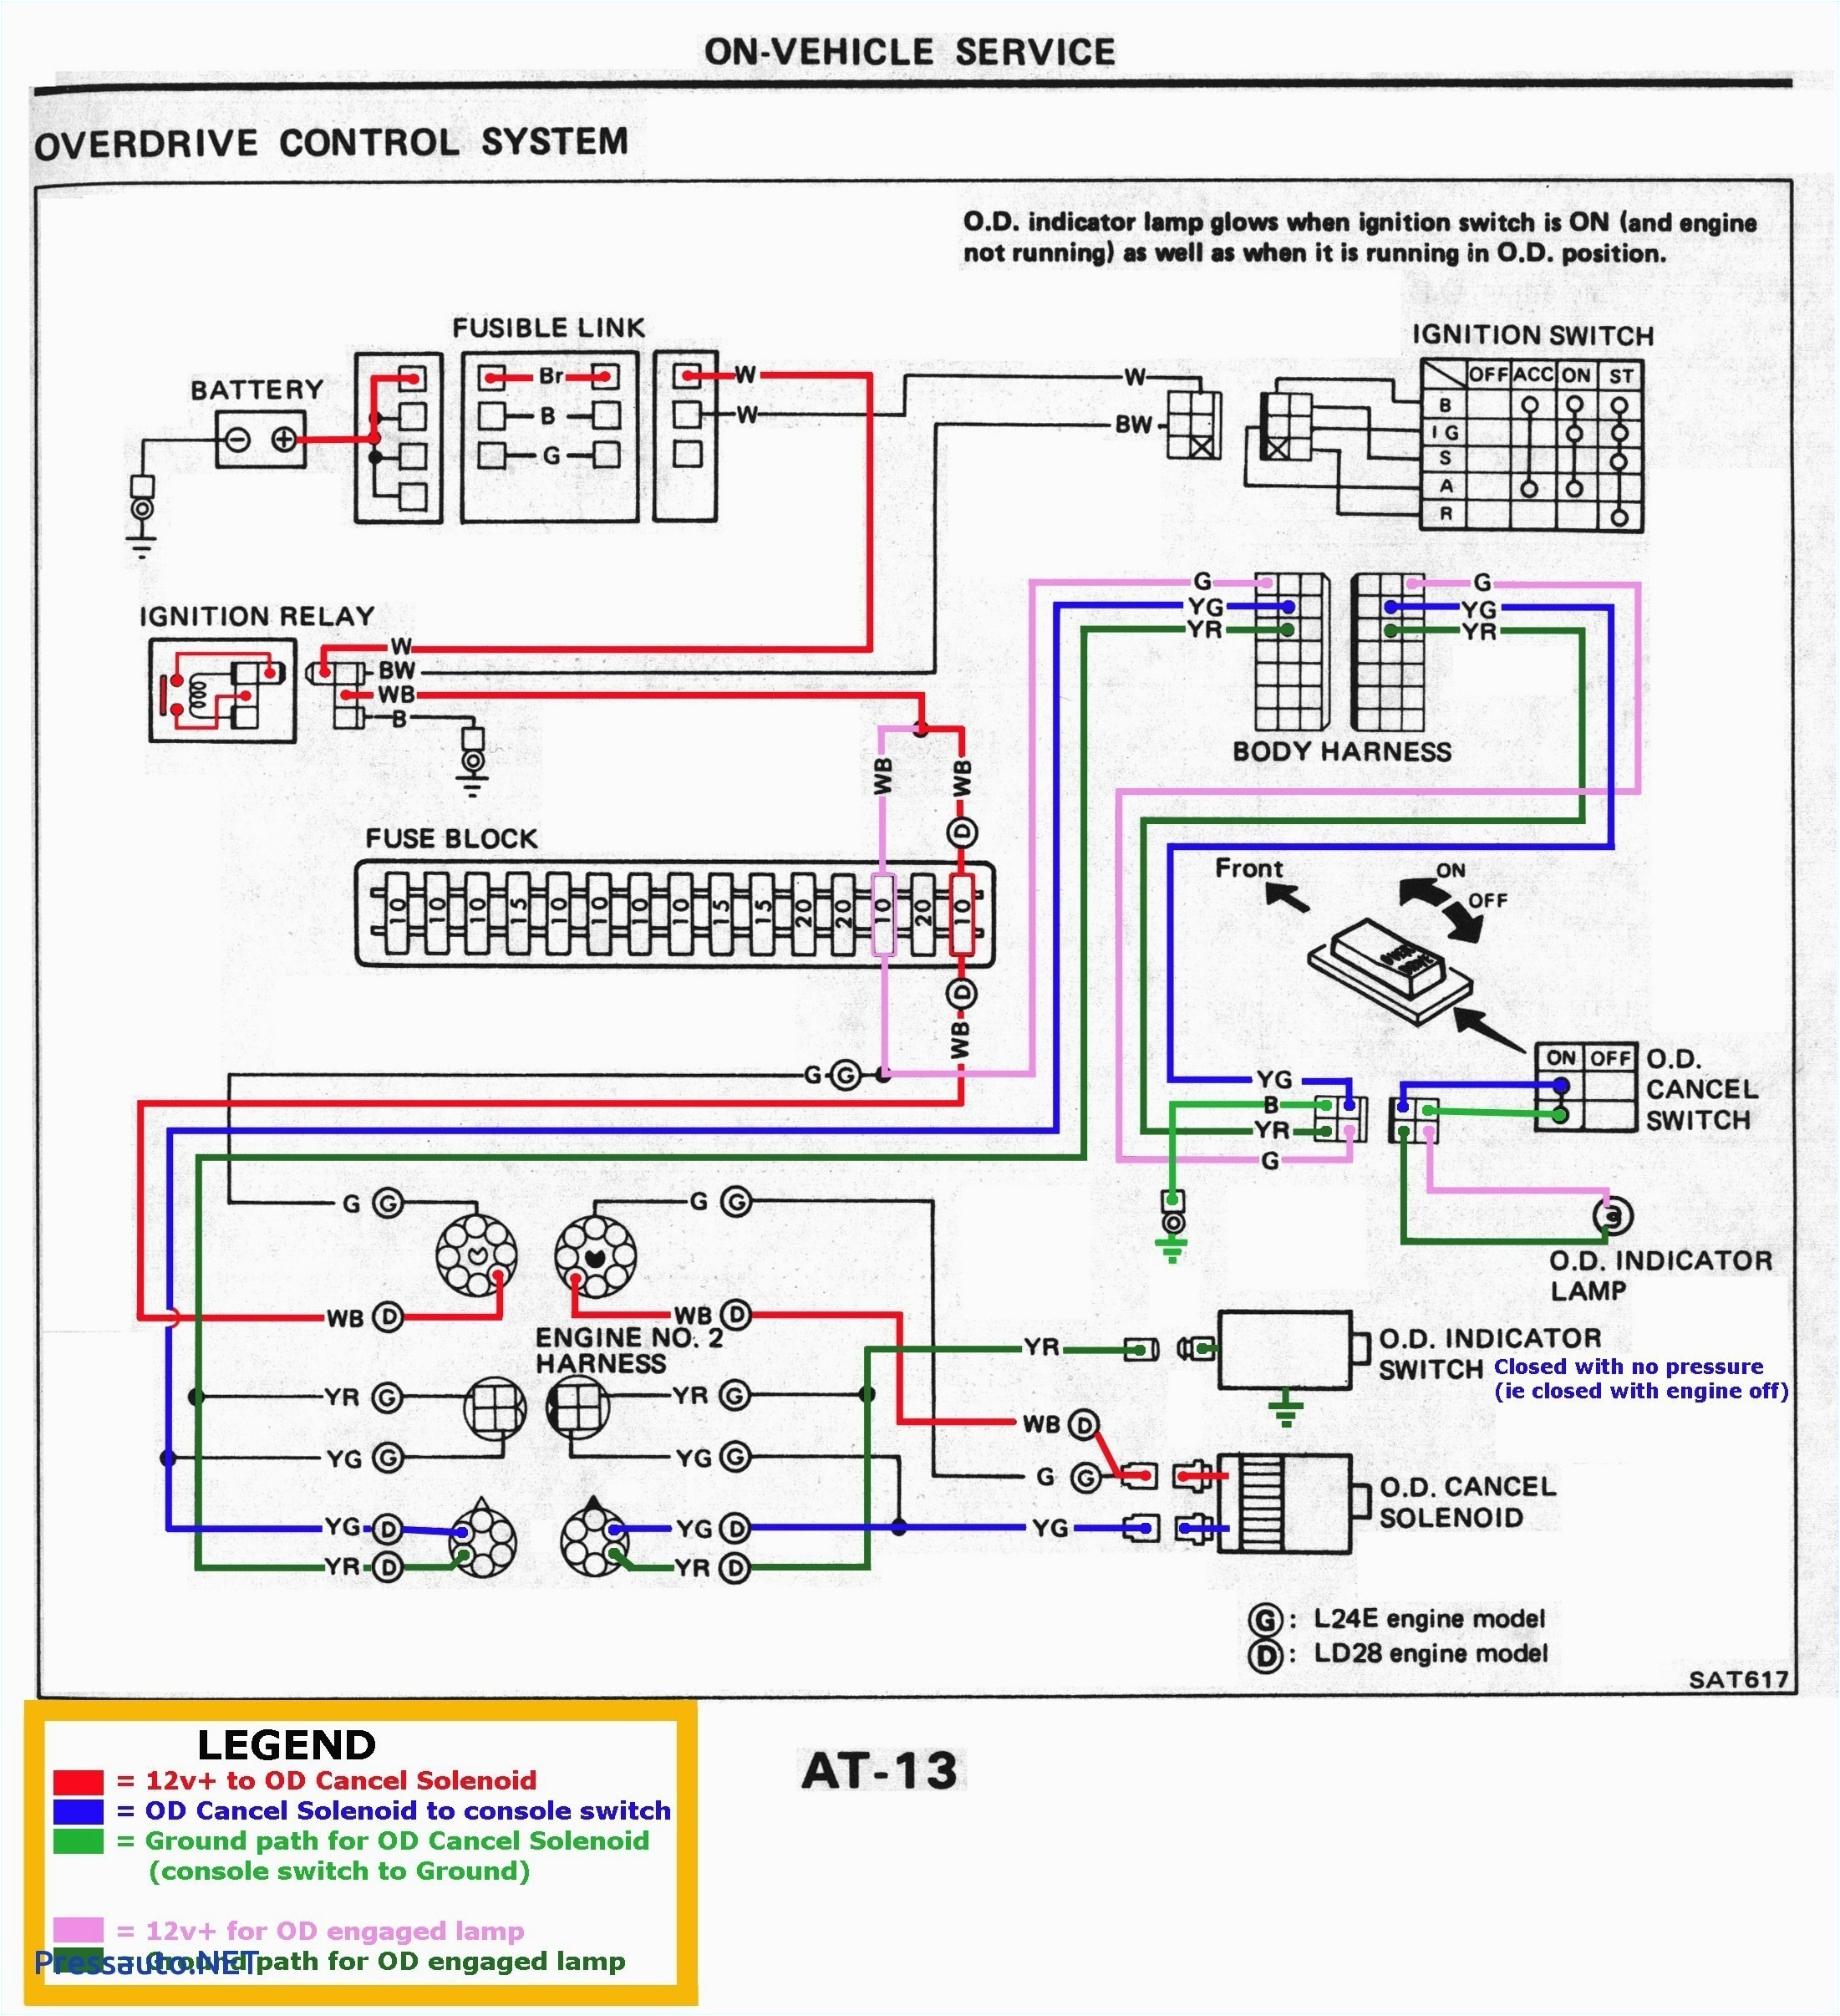 generac whole house generator wiring diagram electrical wiring rh wiringforall today